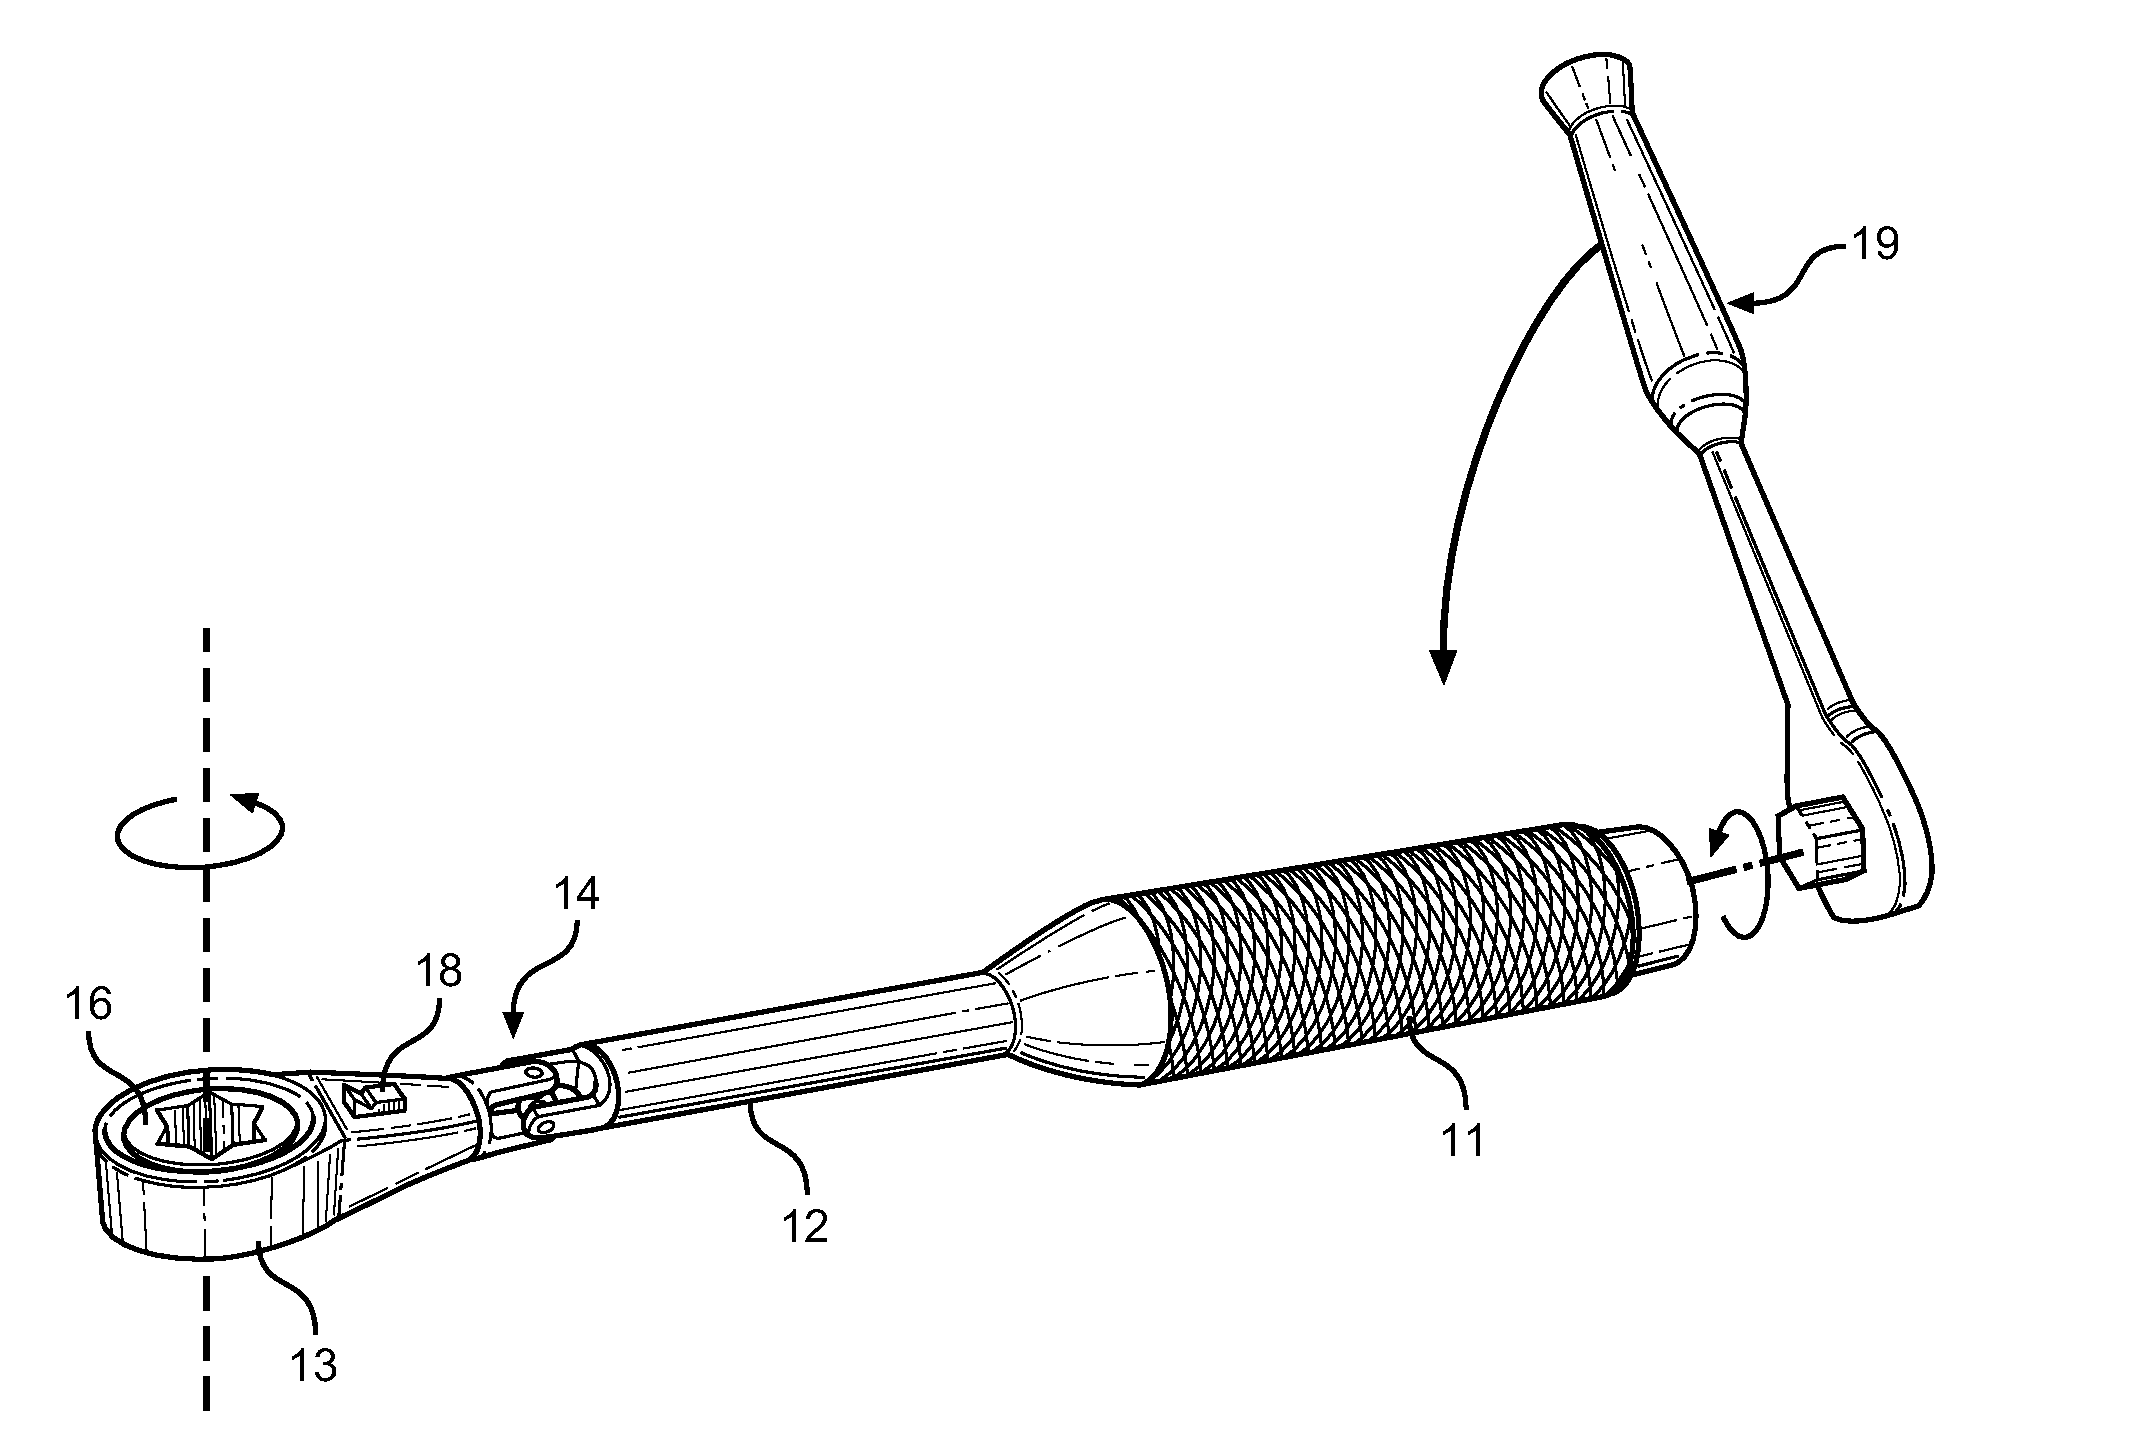 Handle-Driven Torque Transfer Wrench having Pivotable Head